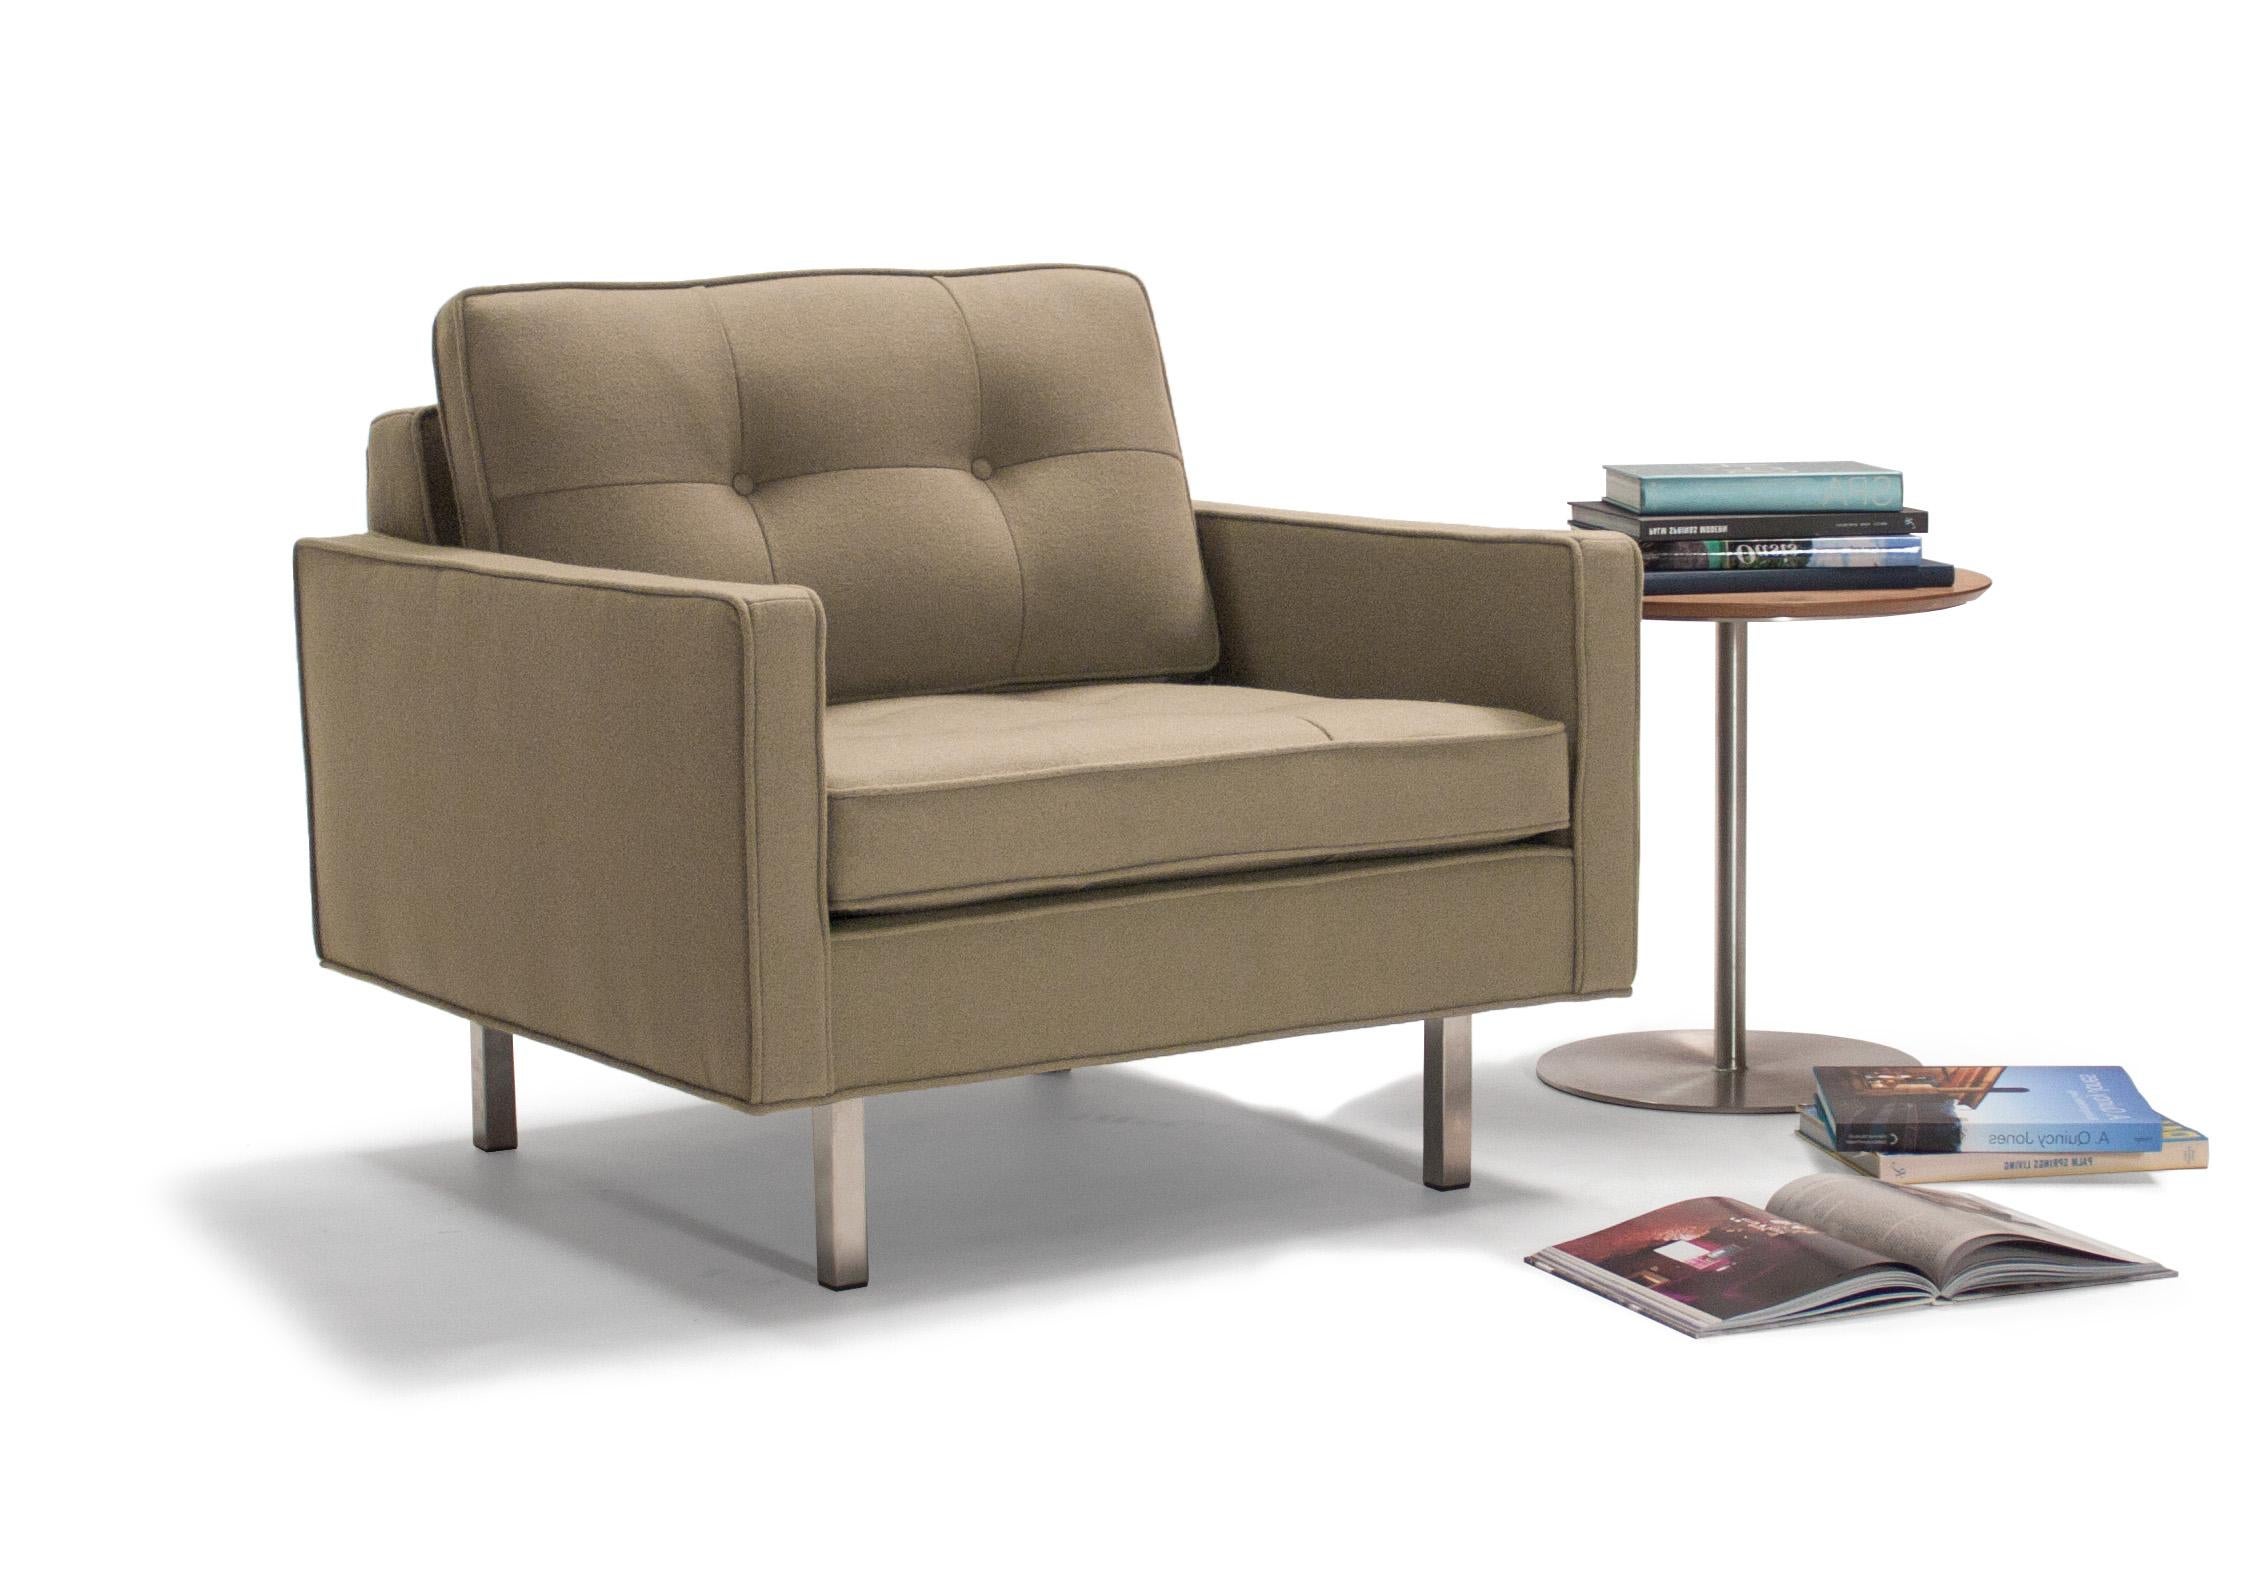 Fait main Vioski New Century Modern Chicago Lounge Chair in Tan (chaise longue Chicago moderne du nouveau siècle) en vente